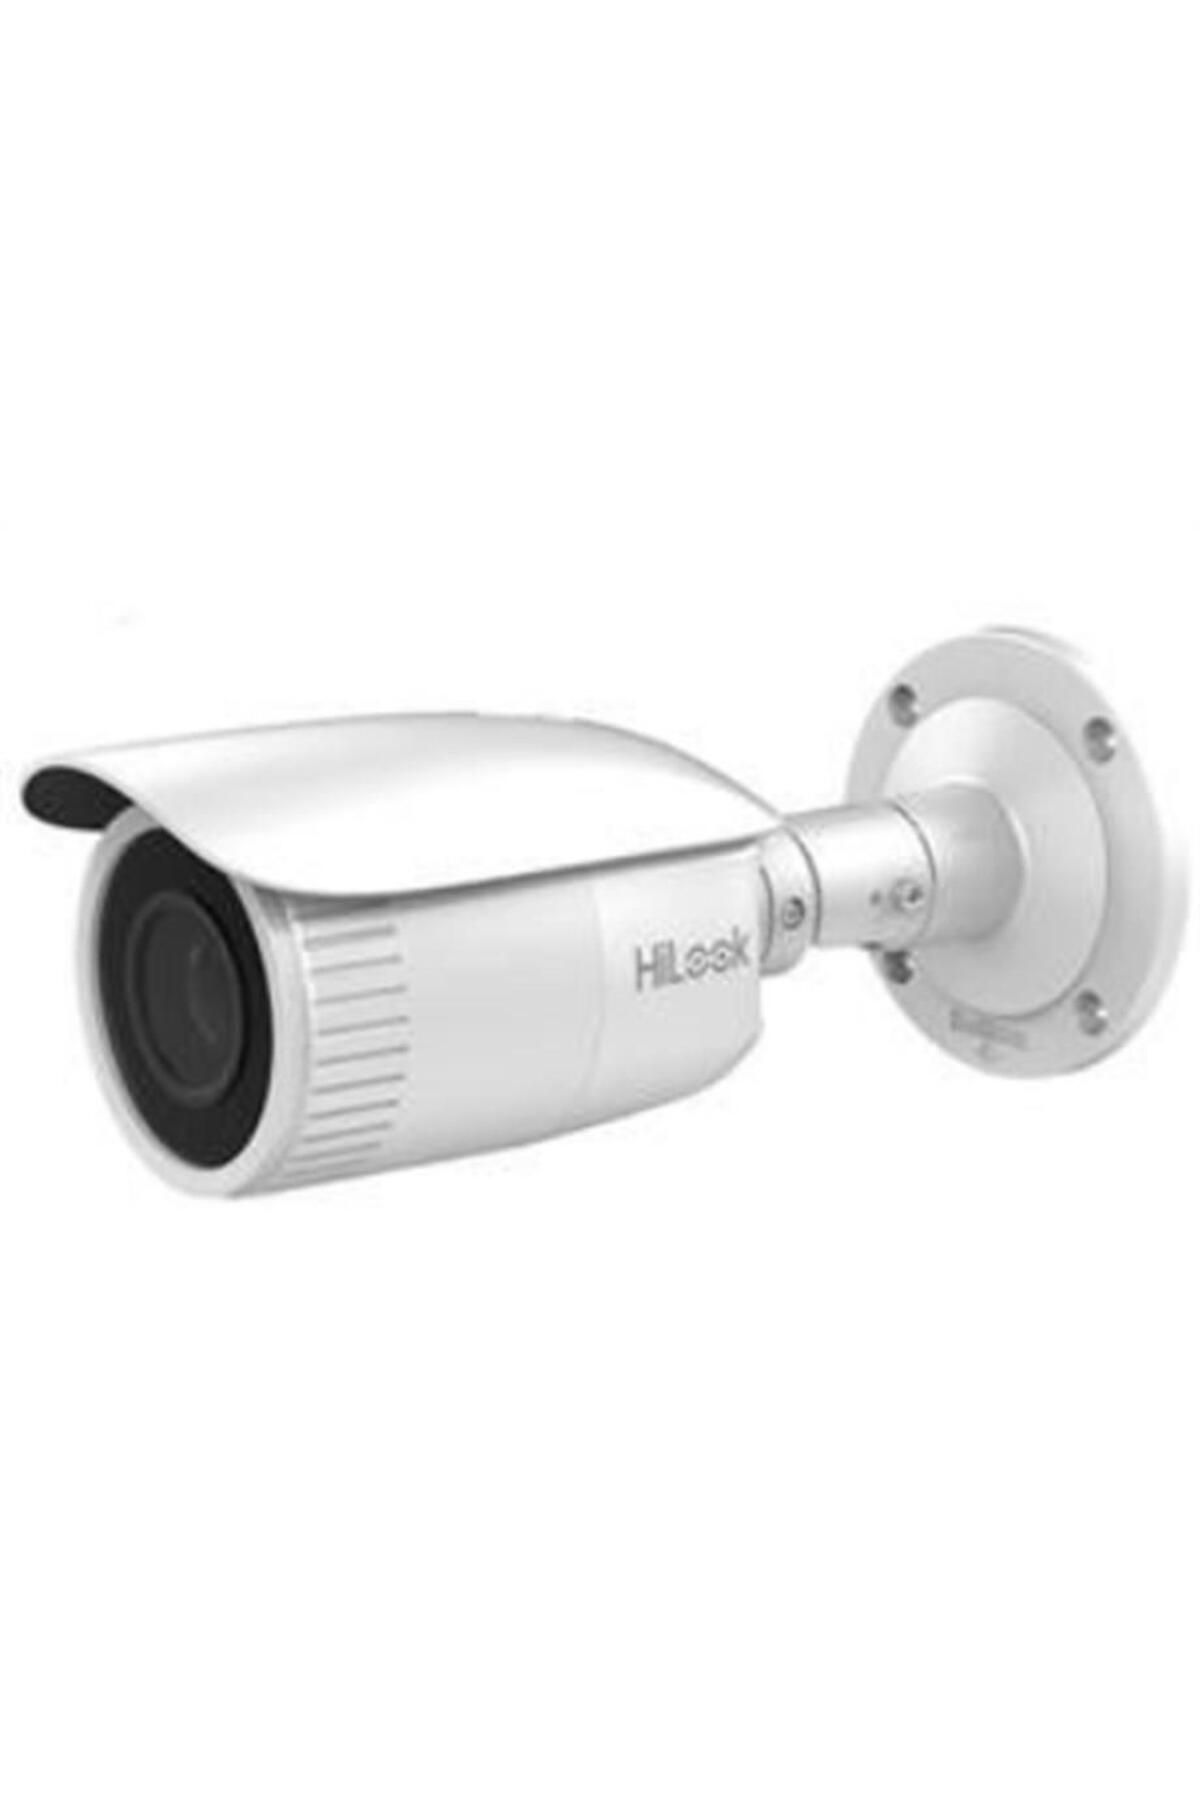 Hilook Ipc-b640h-z 4mp 2.8-12mm Lens Ip Bullet Kamera